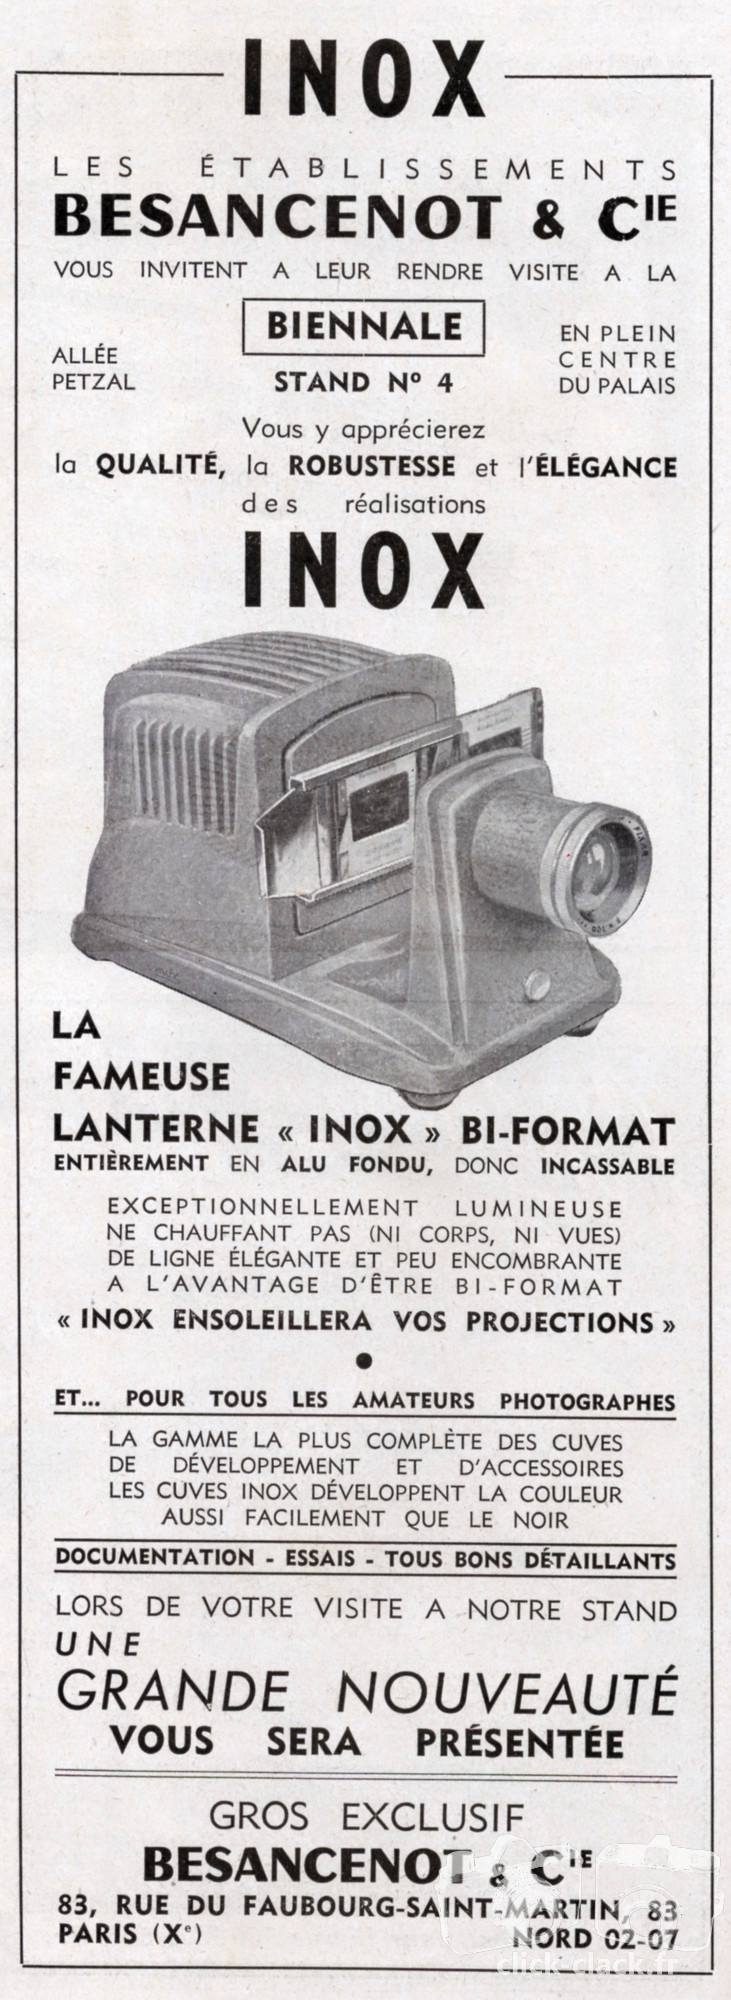 Inox - Lanterne Inox bi-format, Cuves - 1955